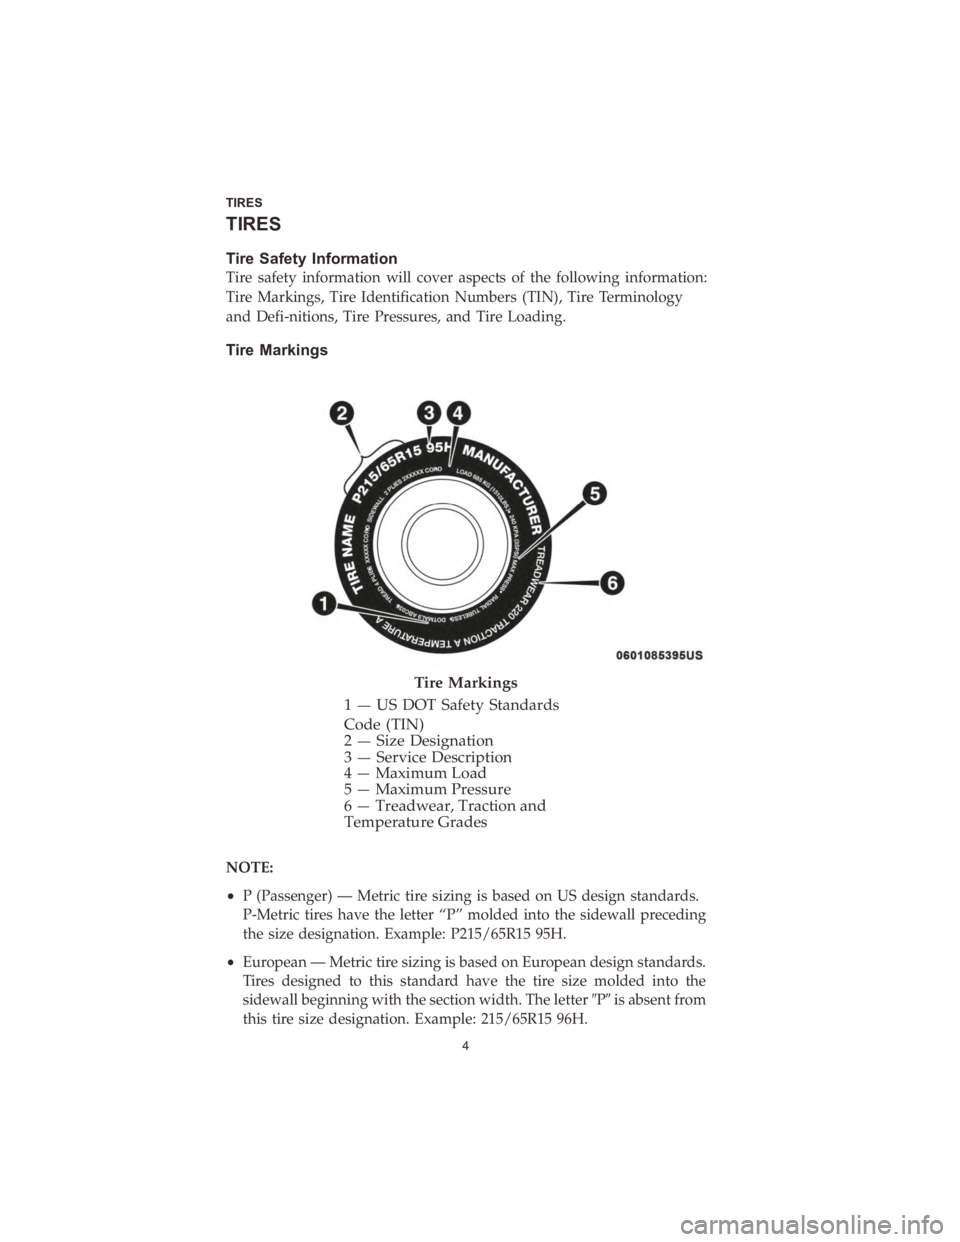 DODGE DURANGO 2020  Vehicle Warranty TIRES
Tire�Safety �Information
Tire� safety� information� will�cover� aspects� of�the� following� information:�
Tire� Markings,� Tire�Identification� Numbers1